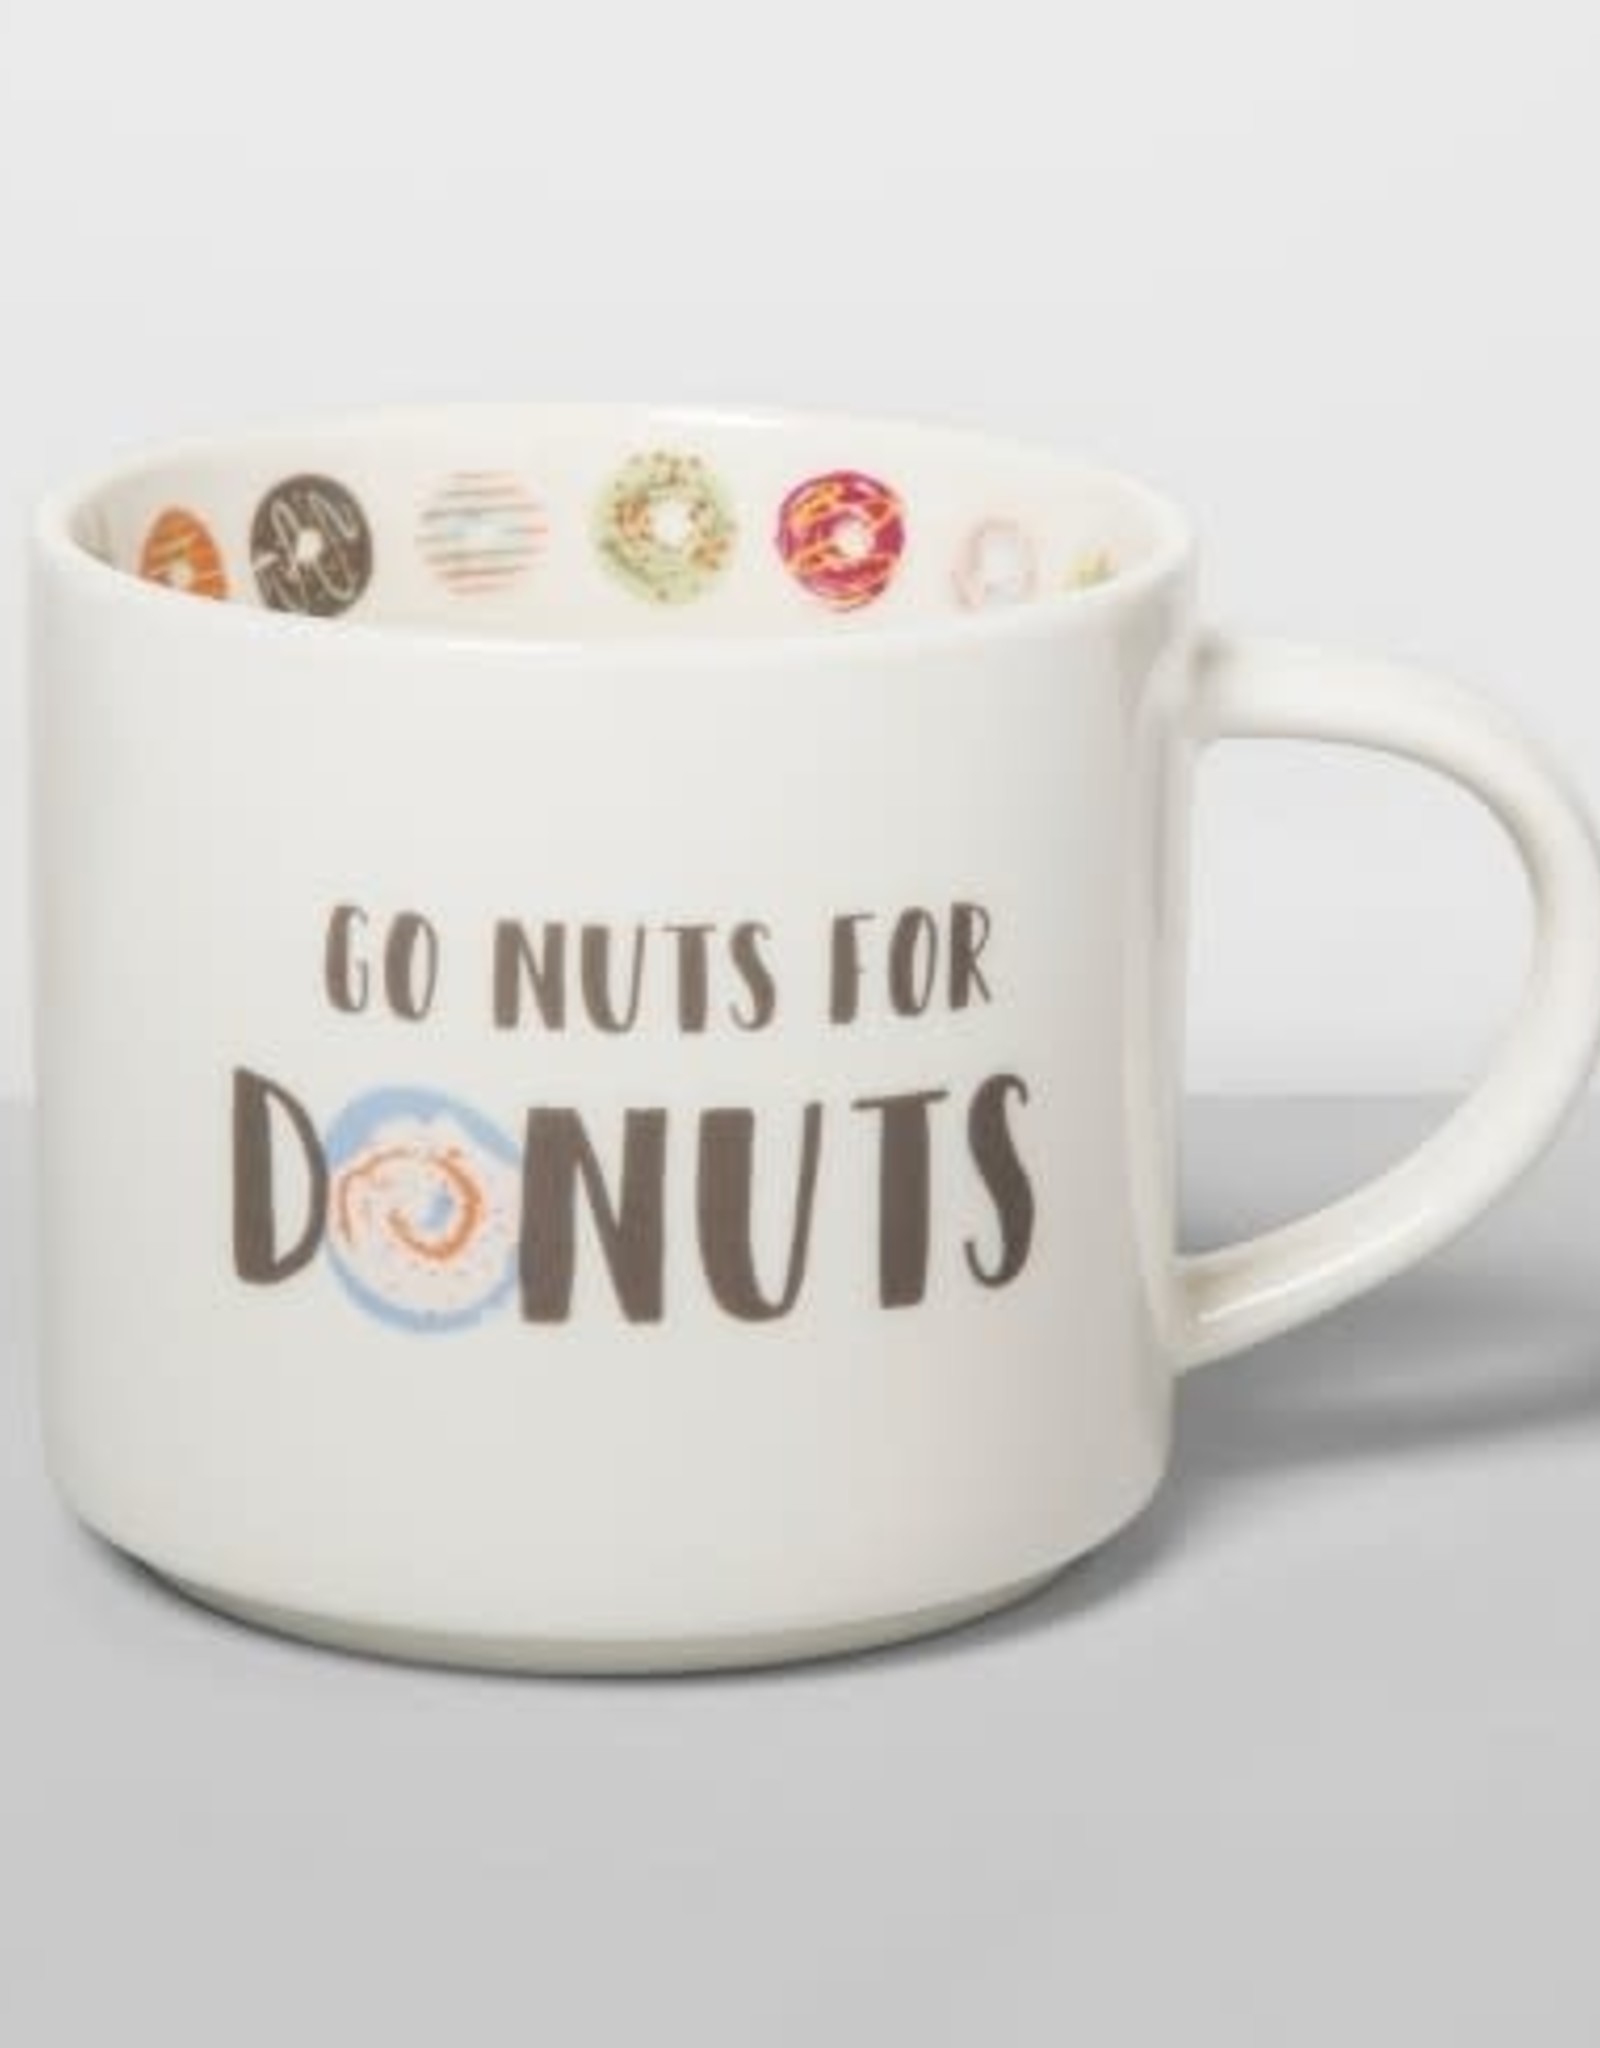 Go nuts for donuts coffee or tea mug